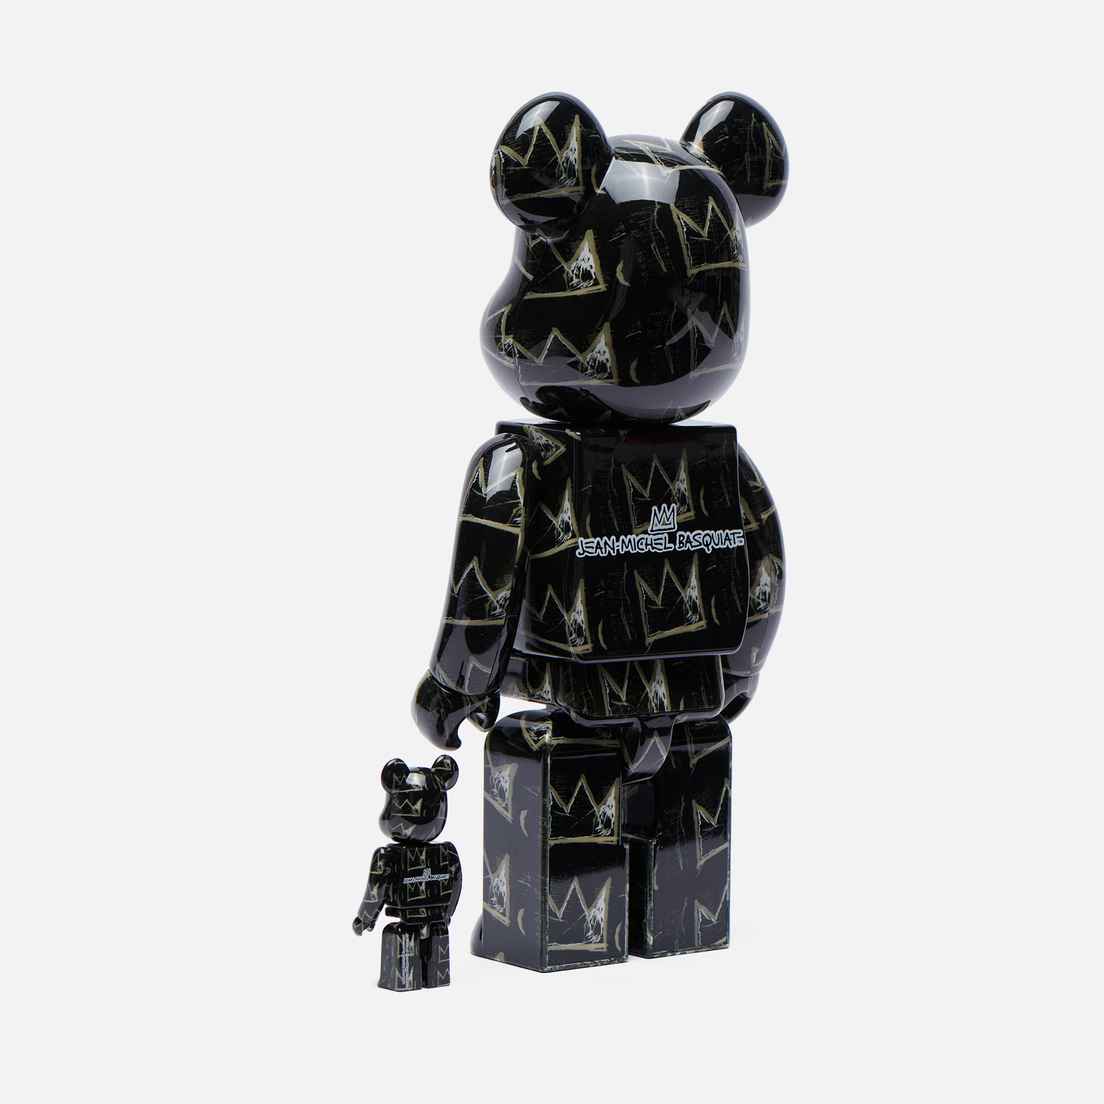 Medicom Toy Игрушка Jean-Michel Basquiat Ver. 8 100% & 400%